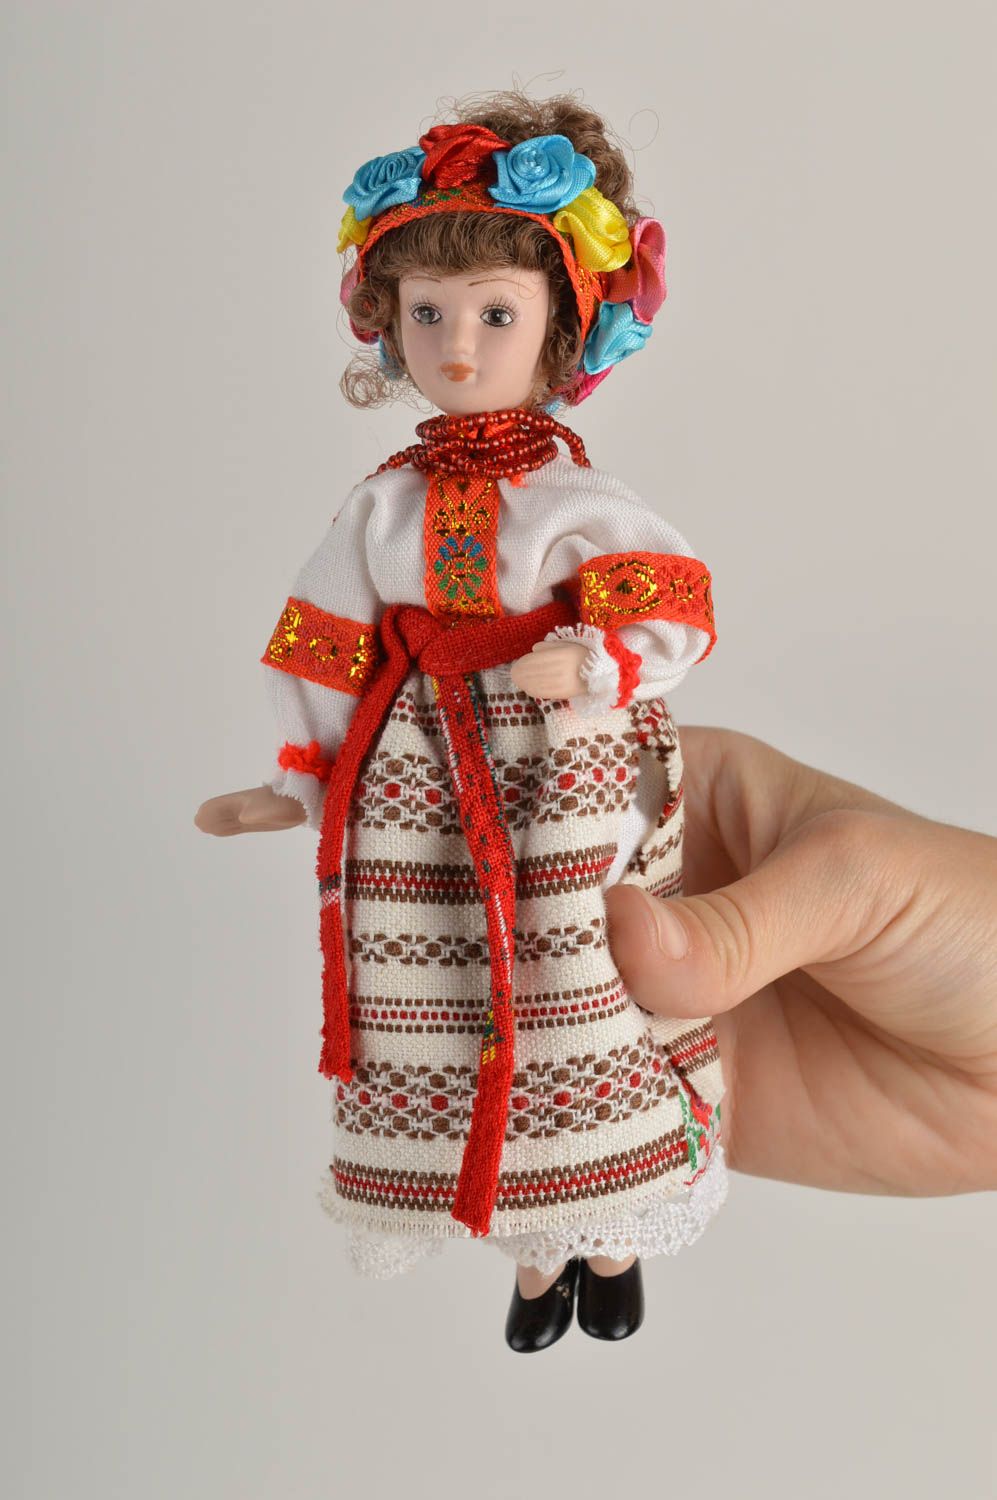 Collectible dolls folk dolls toys for children nursery decor home decor photo 2